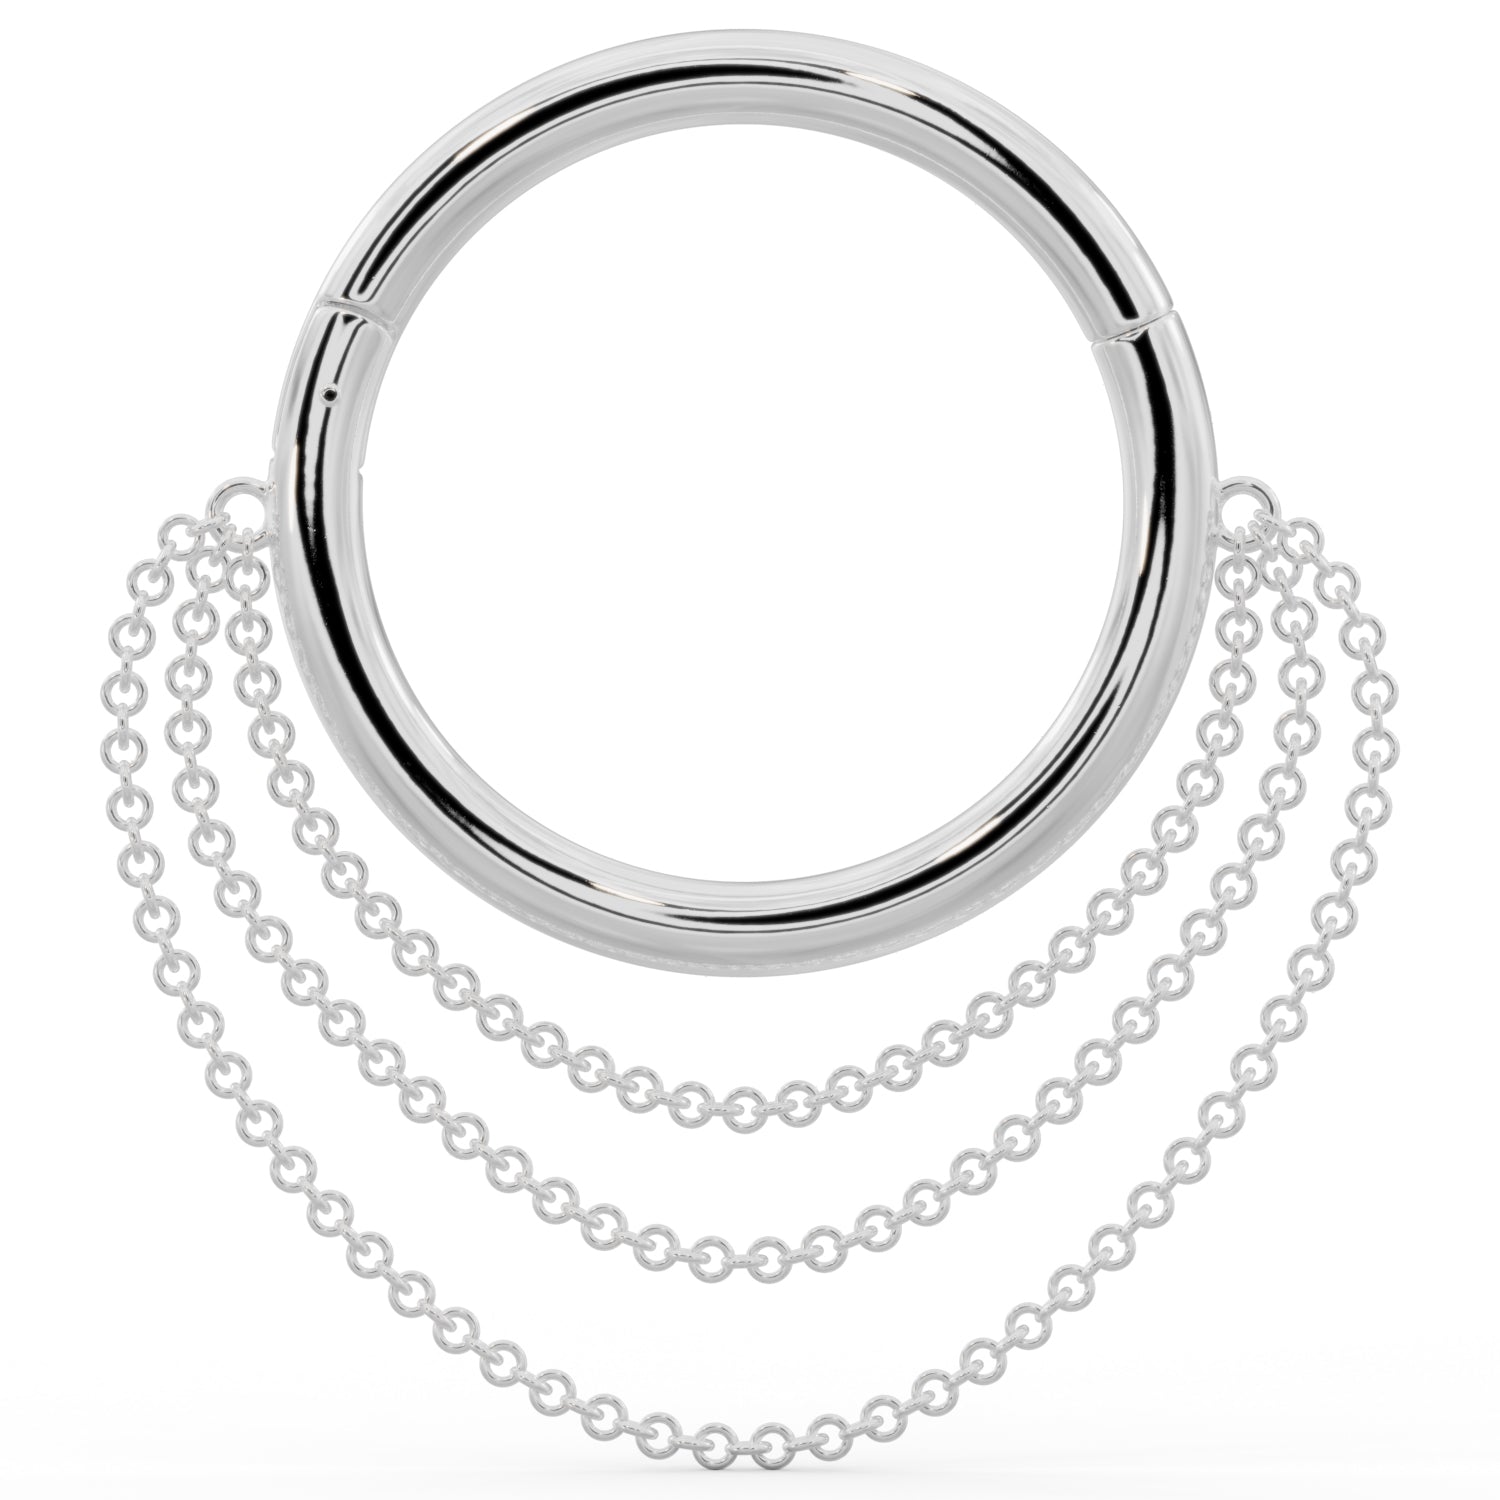 Cascading Chains 14k Gold Hoop Clicker Ring-14K White Gold   16G (1.2mm)   1 2